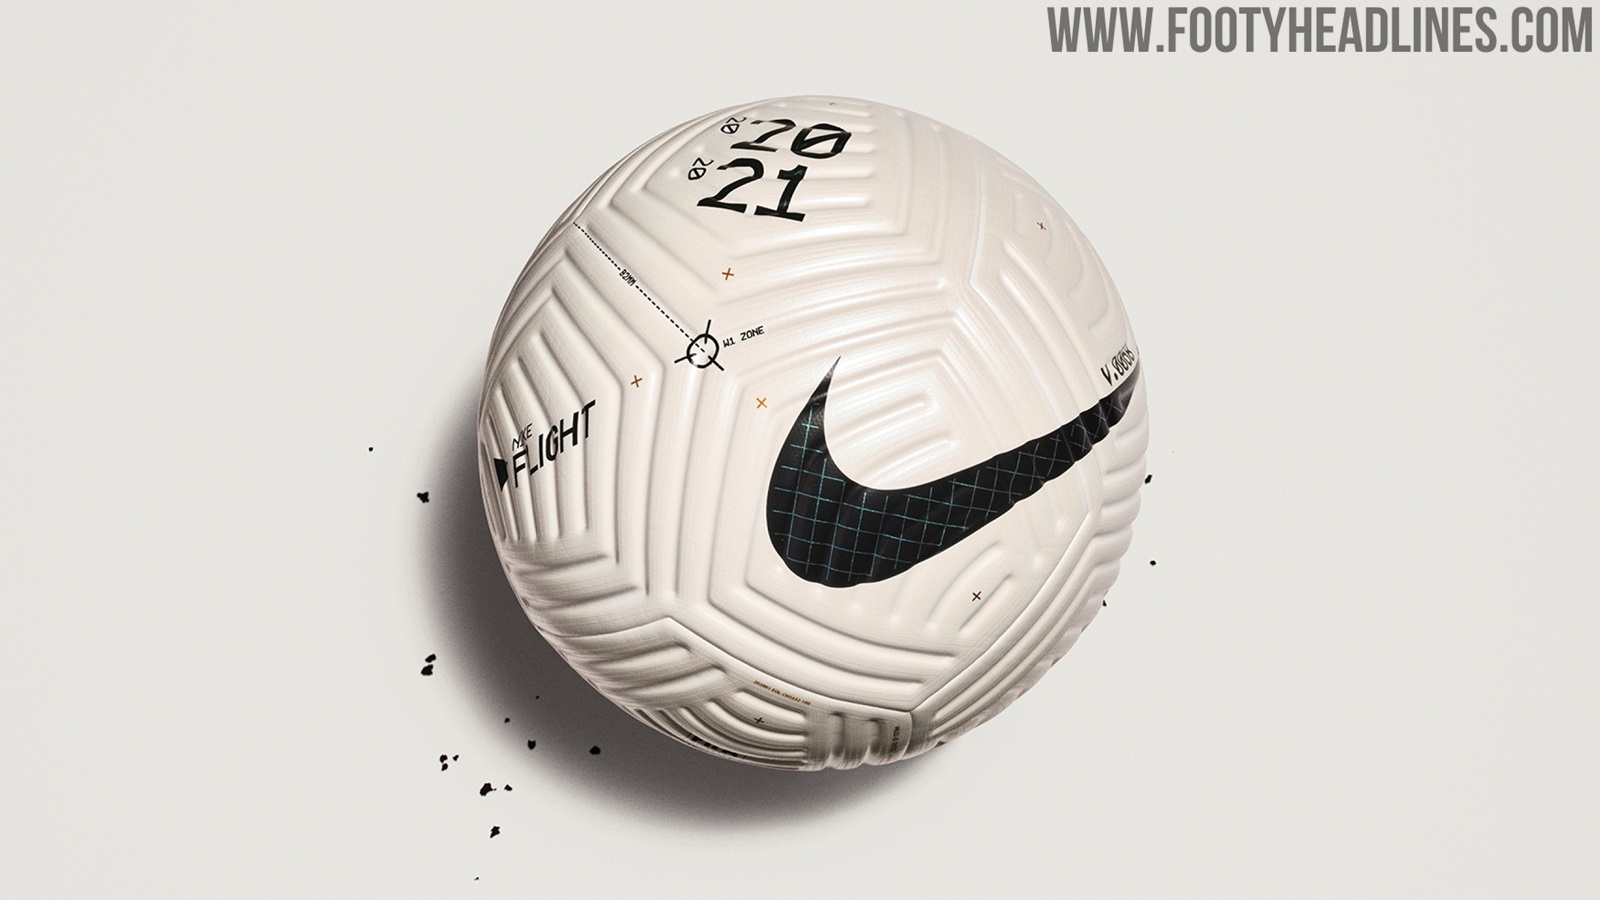 Nike Flight Football Revealed - Features Aerowsculpt Tech - Footy